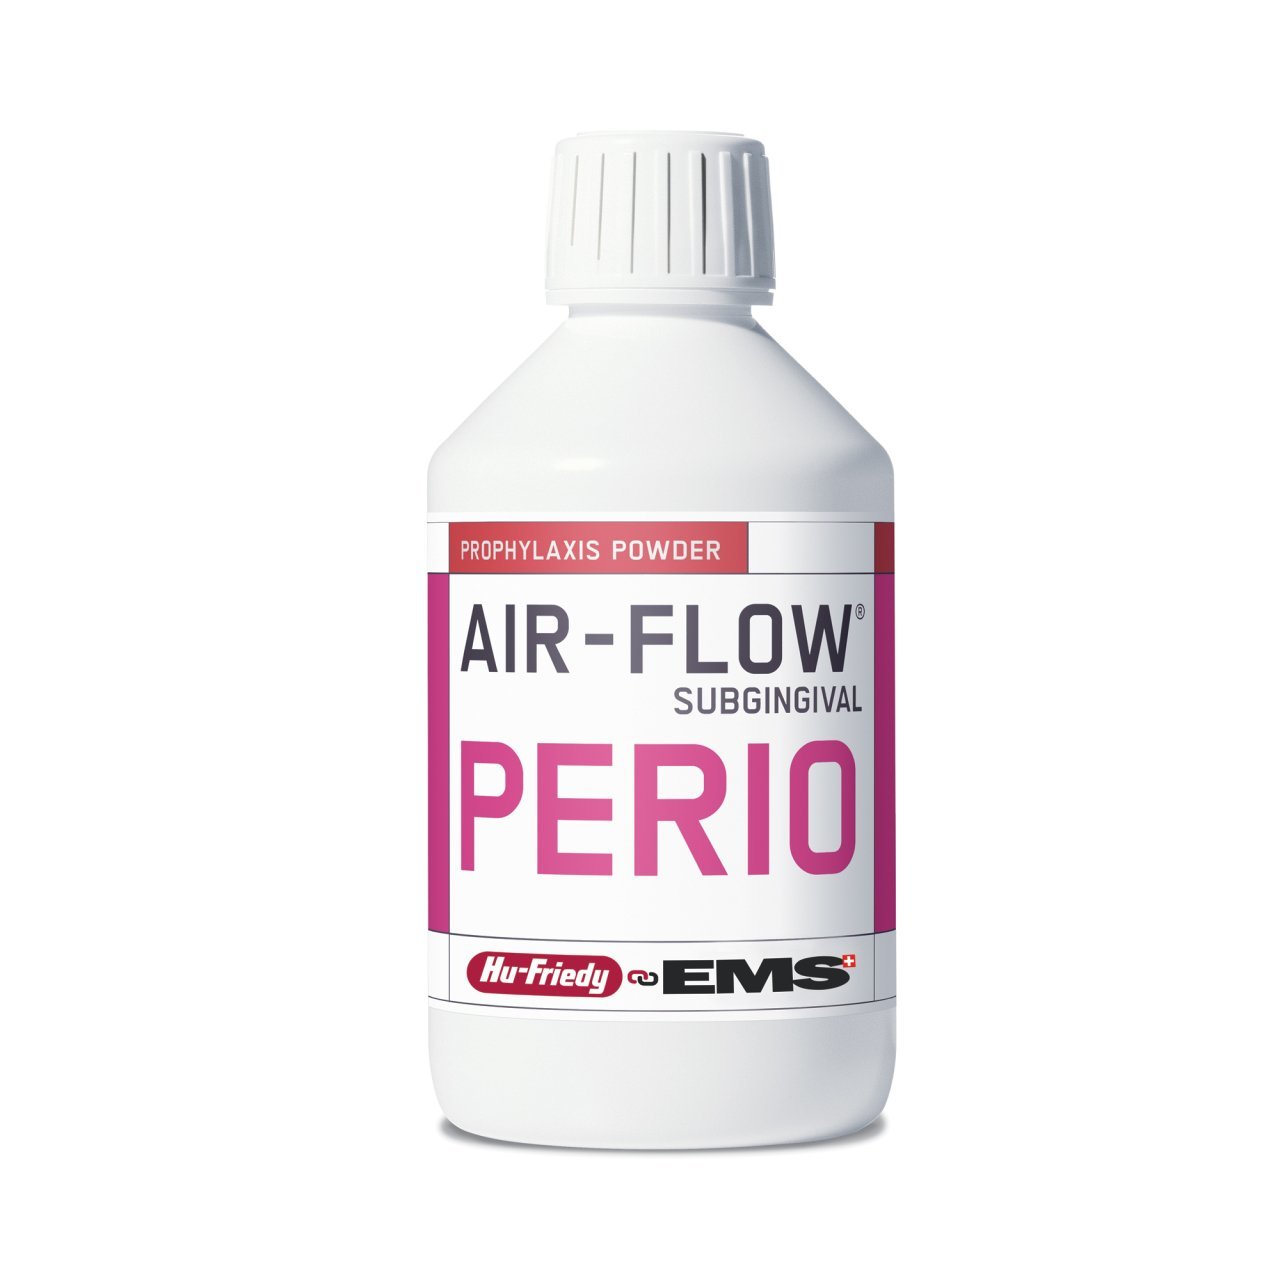 Air Flow Perio. Насадка Perio Flow купить. Air flow купить